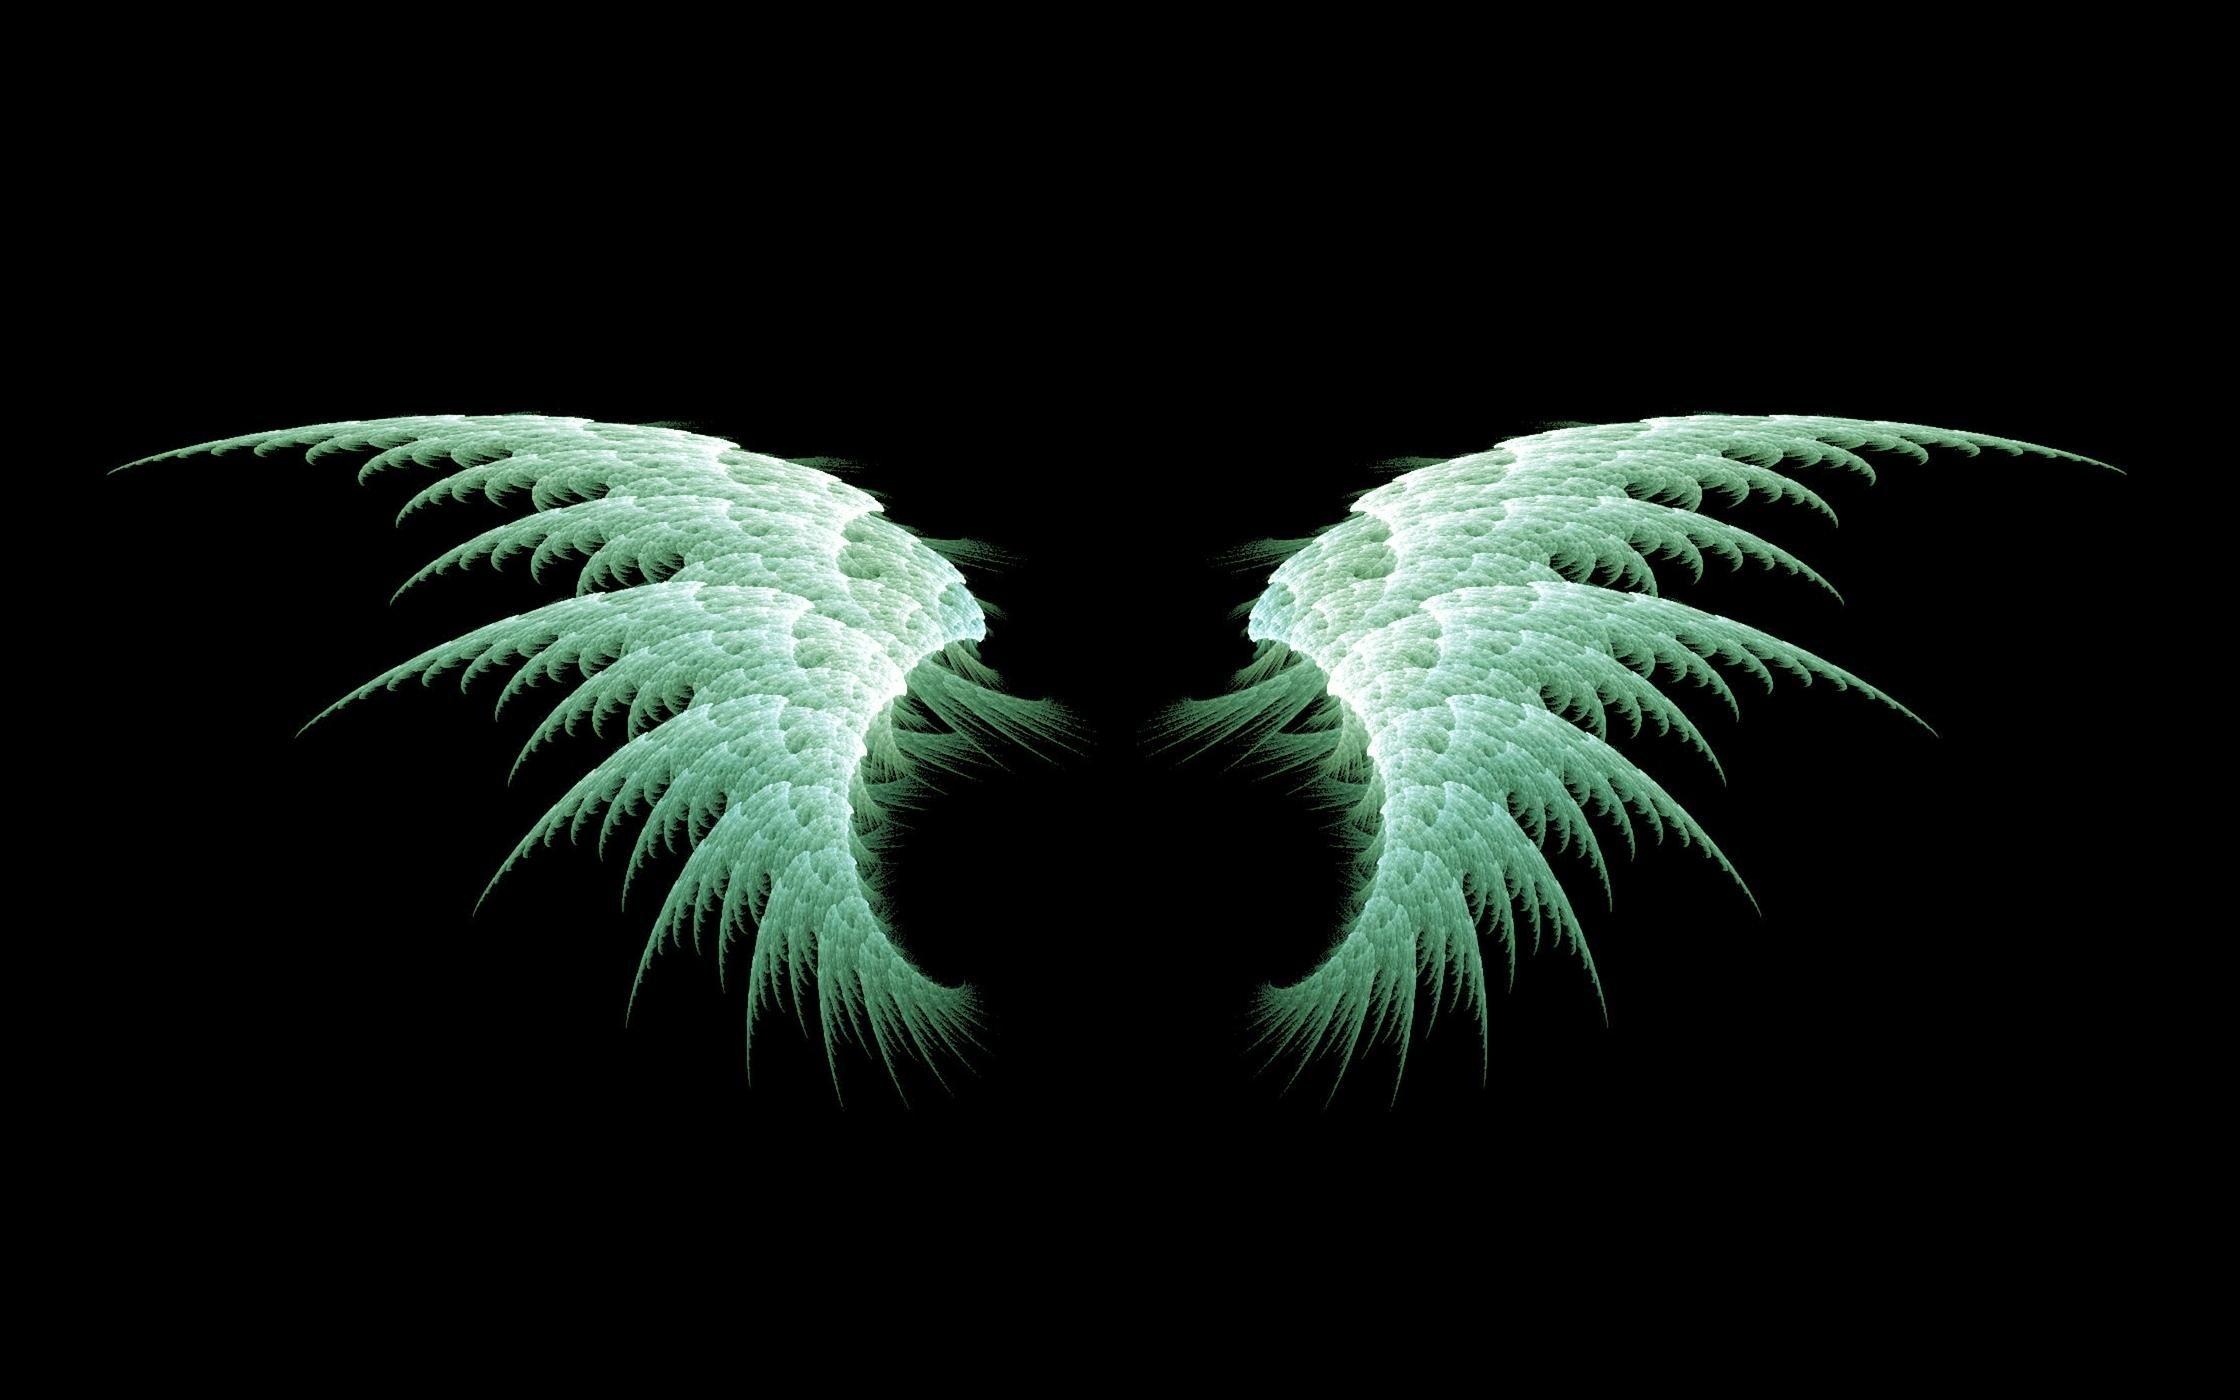 Anime Angel wings. Wallpaper, Background, Image, Art Photo